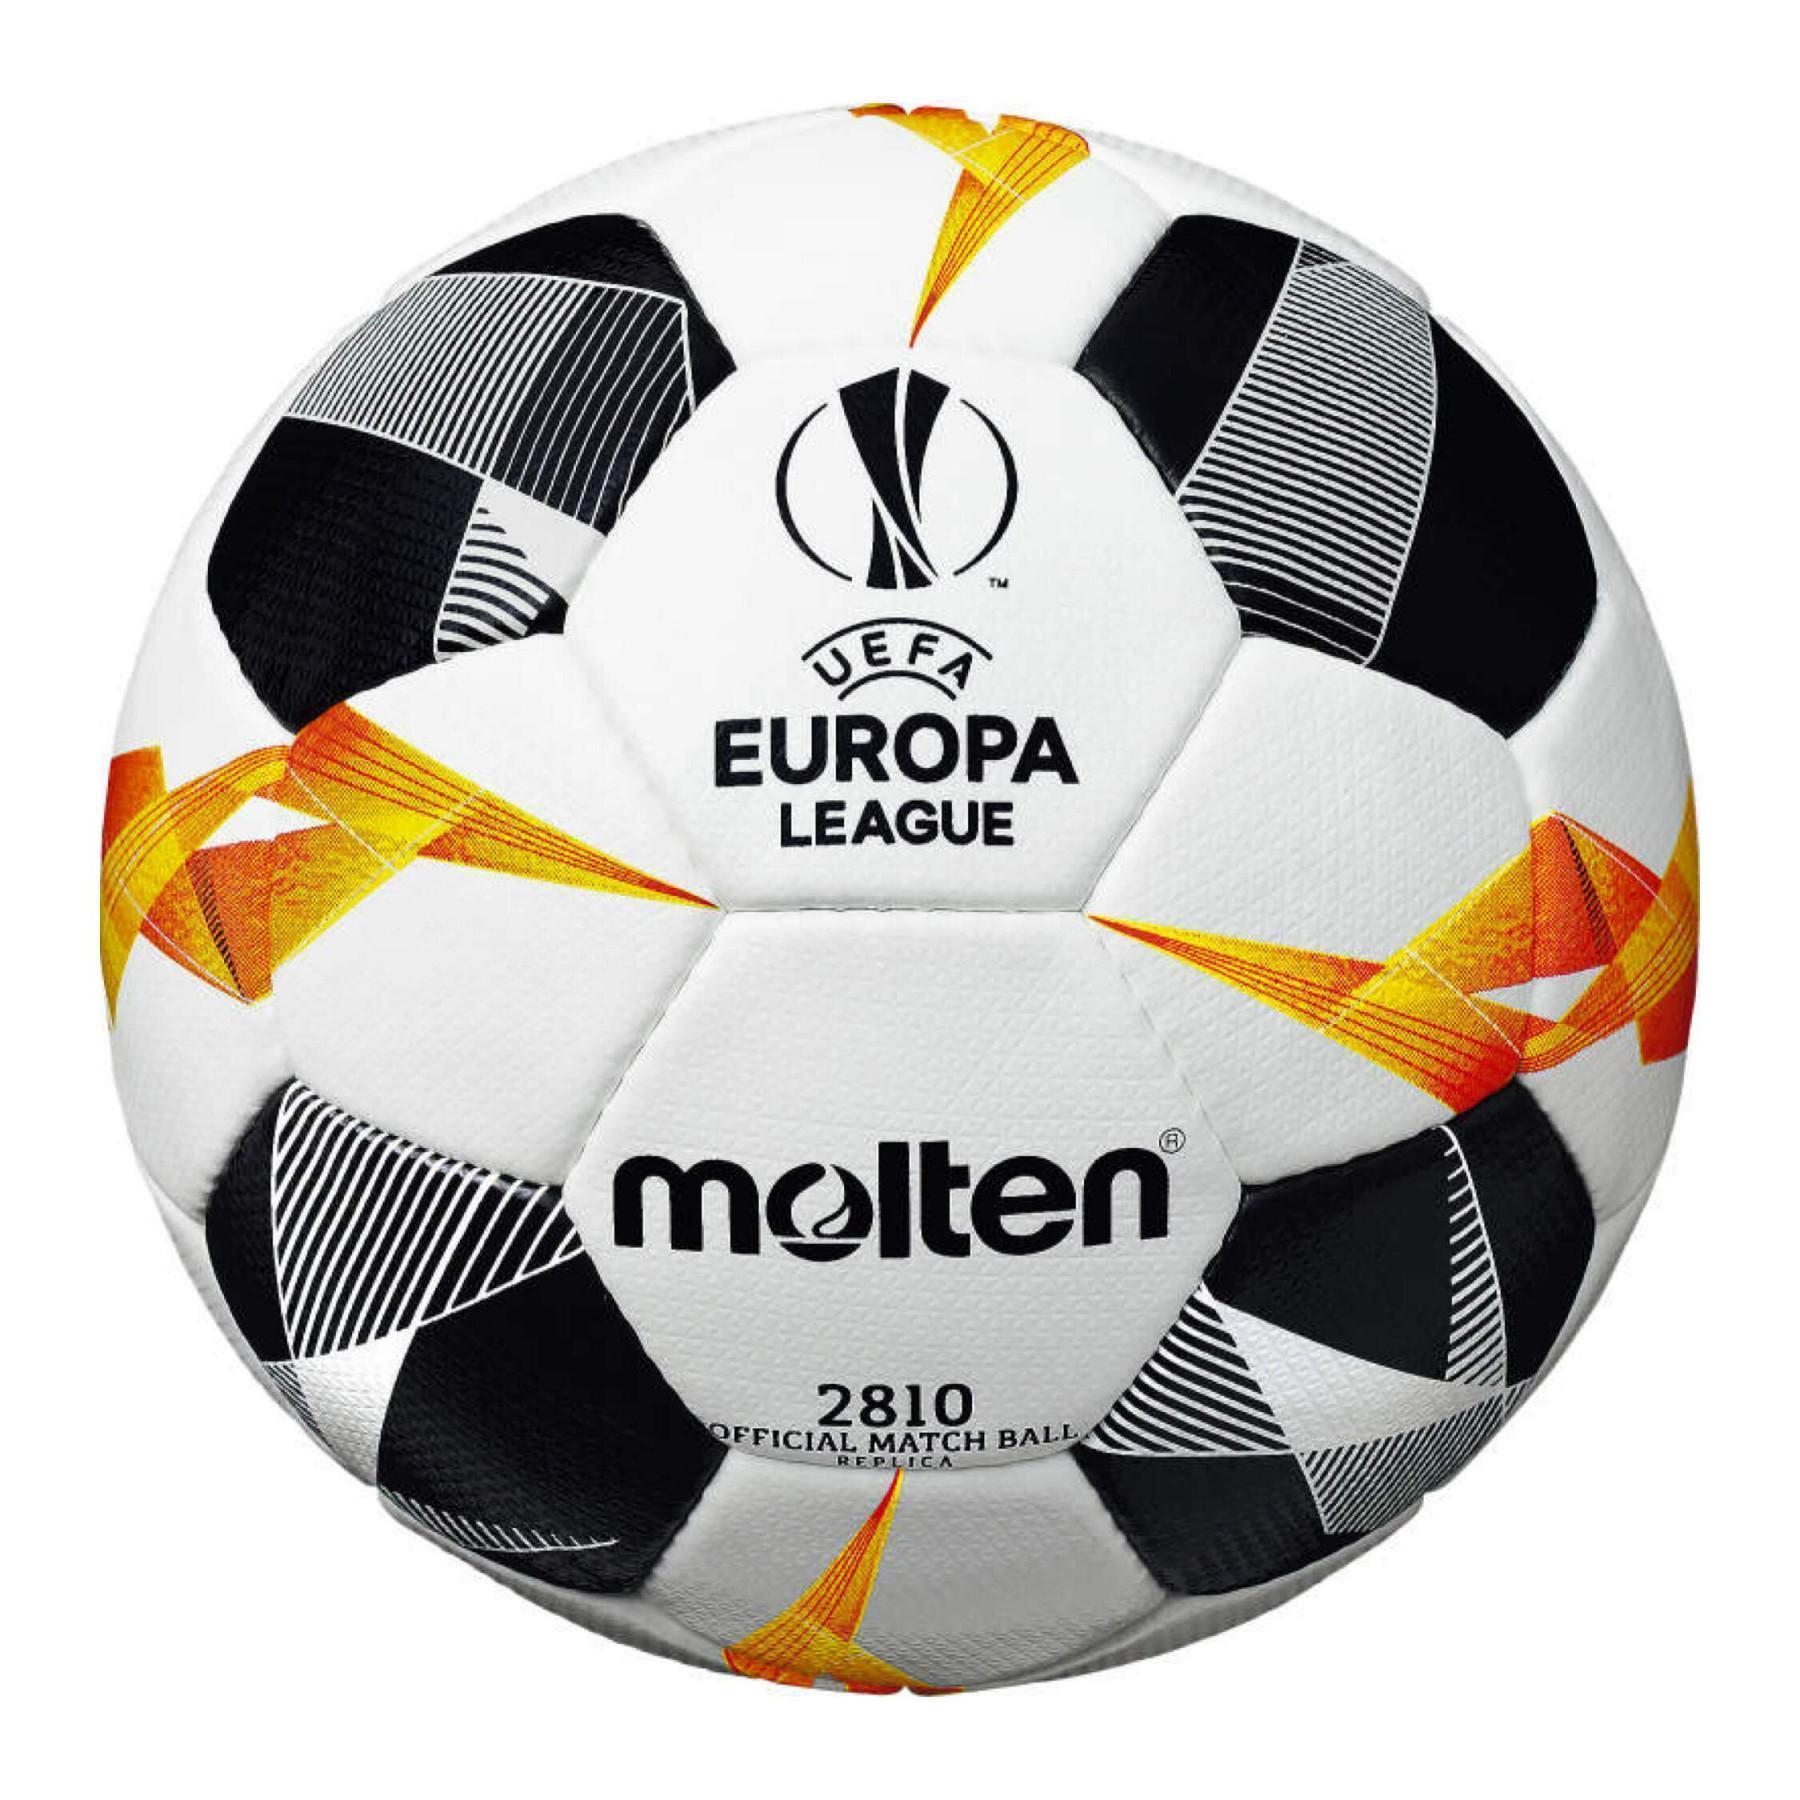 Balon Molten fu2810 UEFA 2019/20